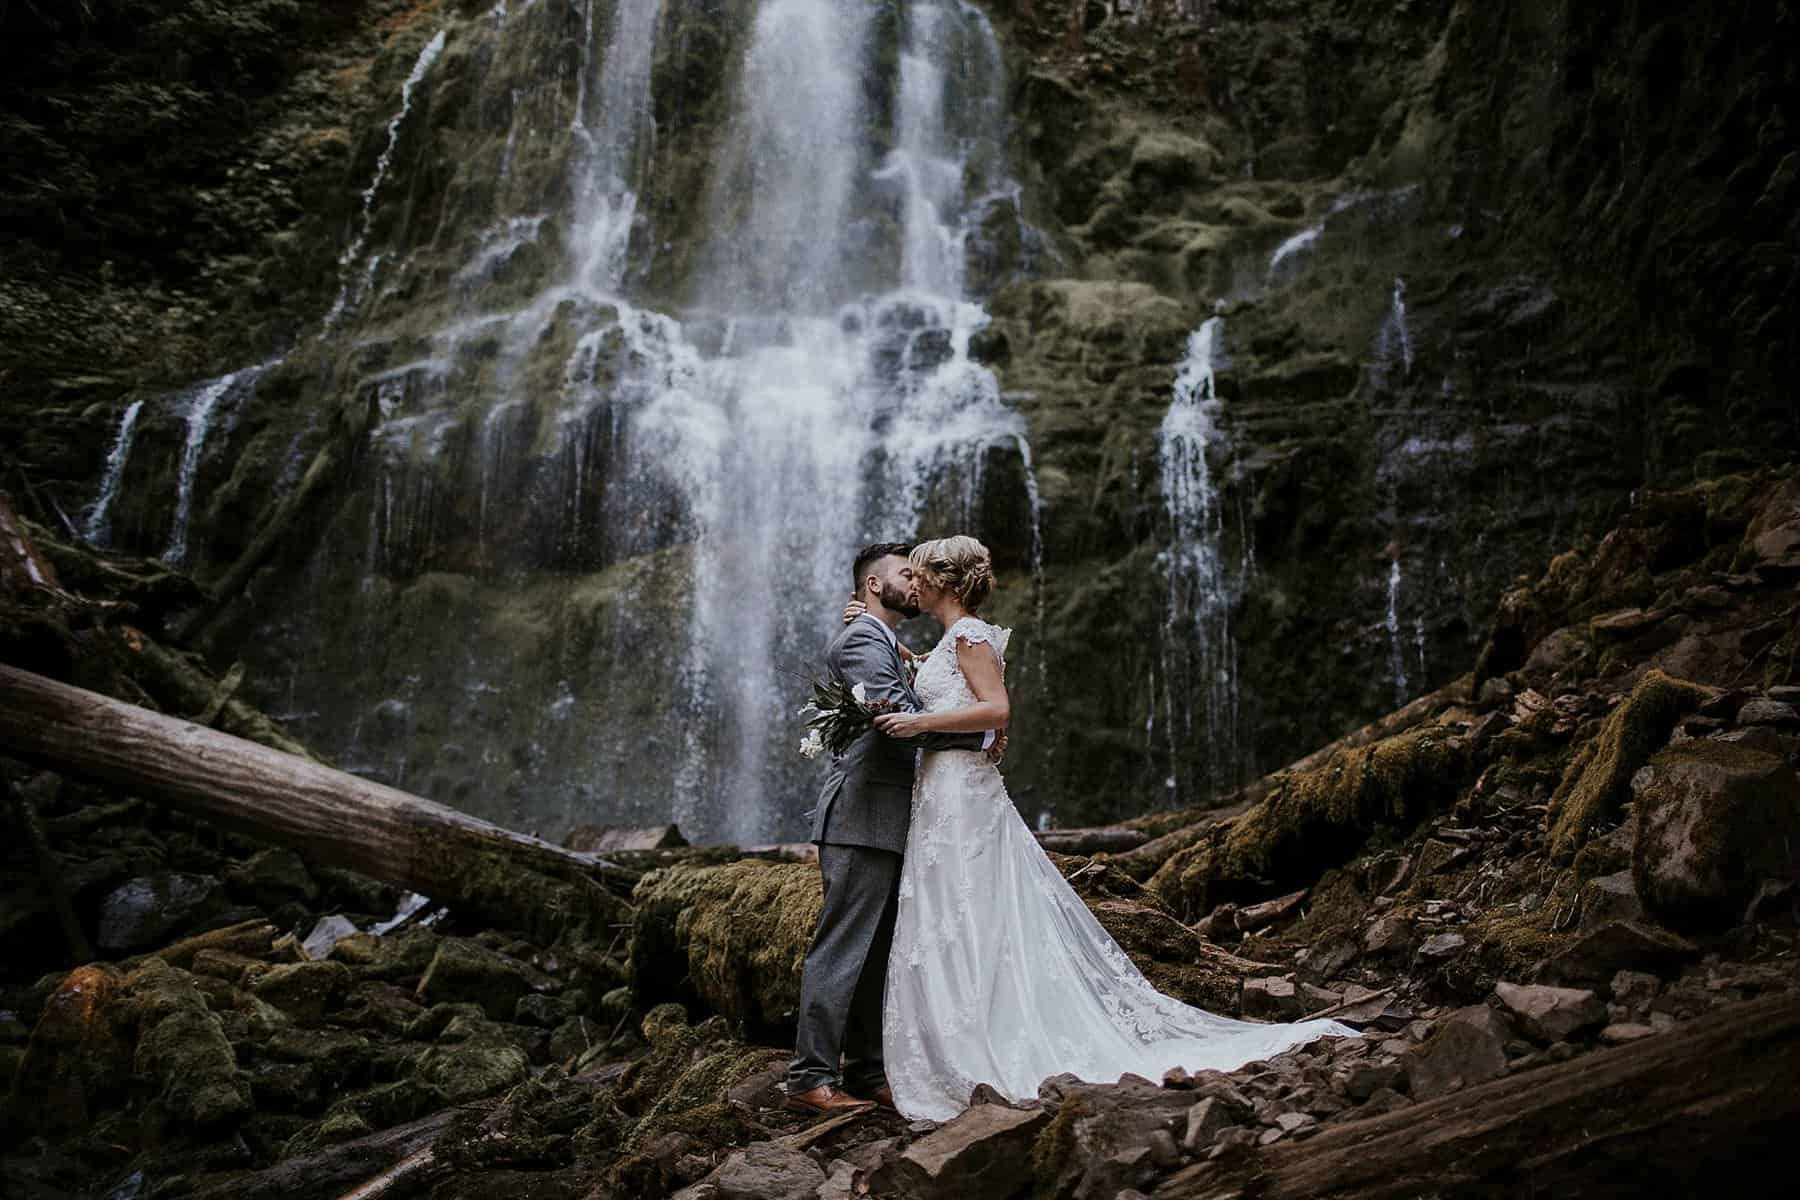 bend-central-oregon-waterfall-adventure-wedding-elopement-007